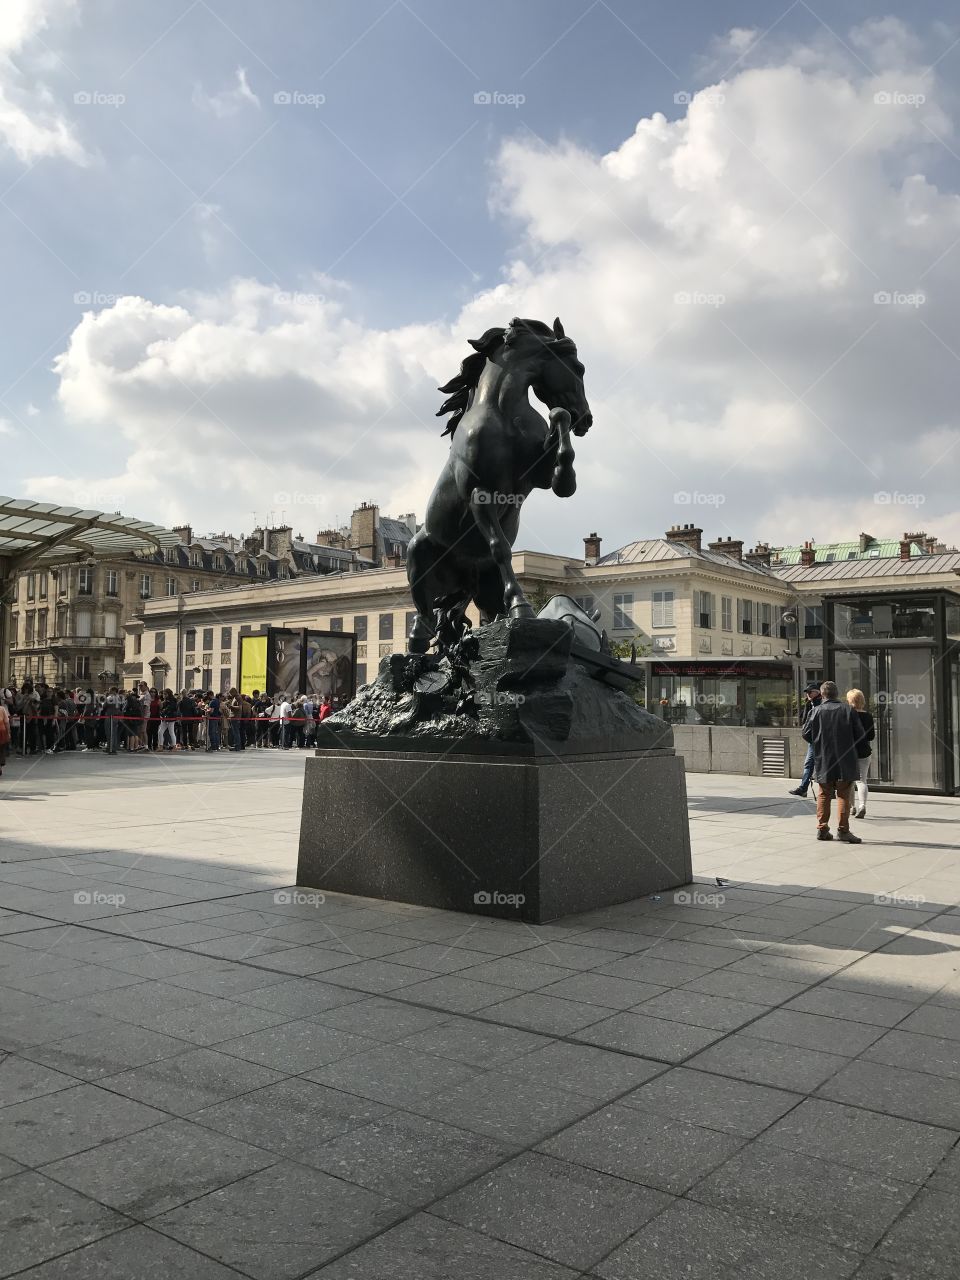 City, Sculpture, Street, People, Statue